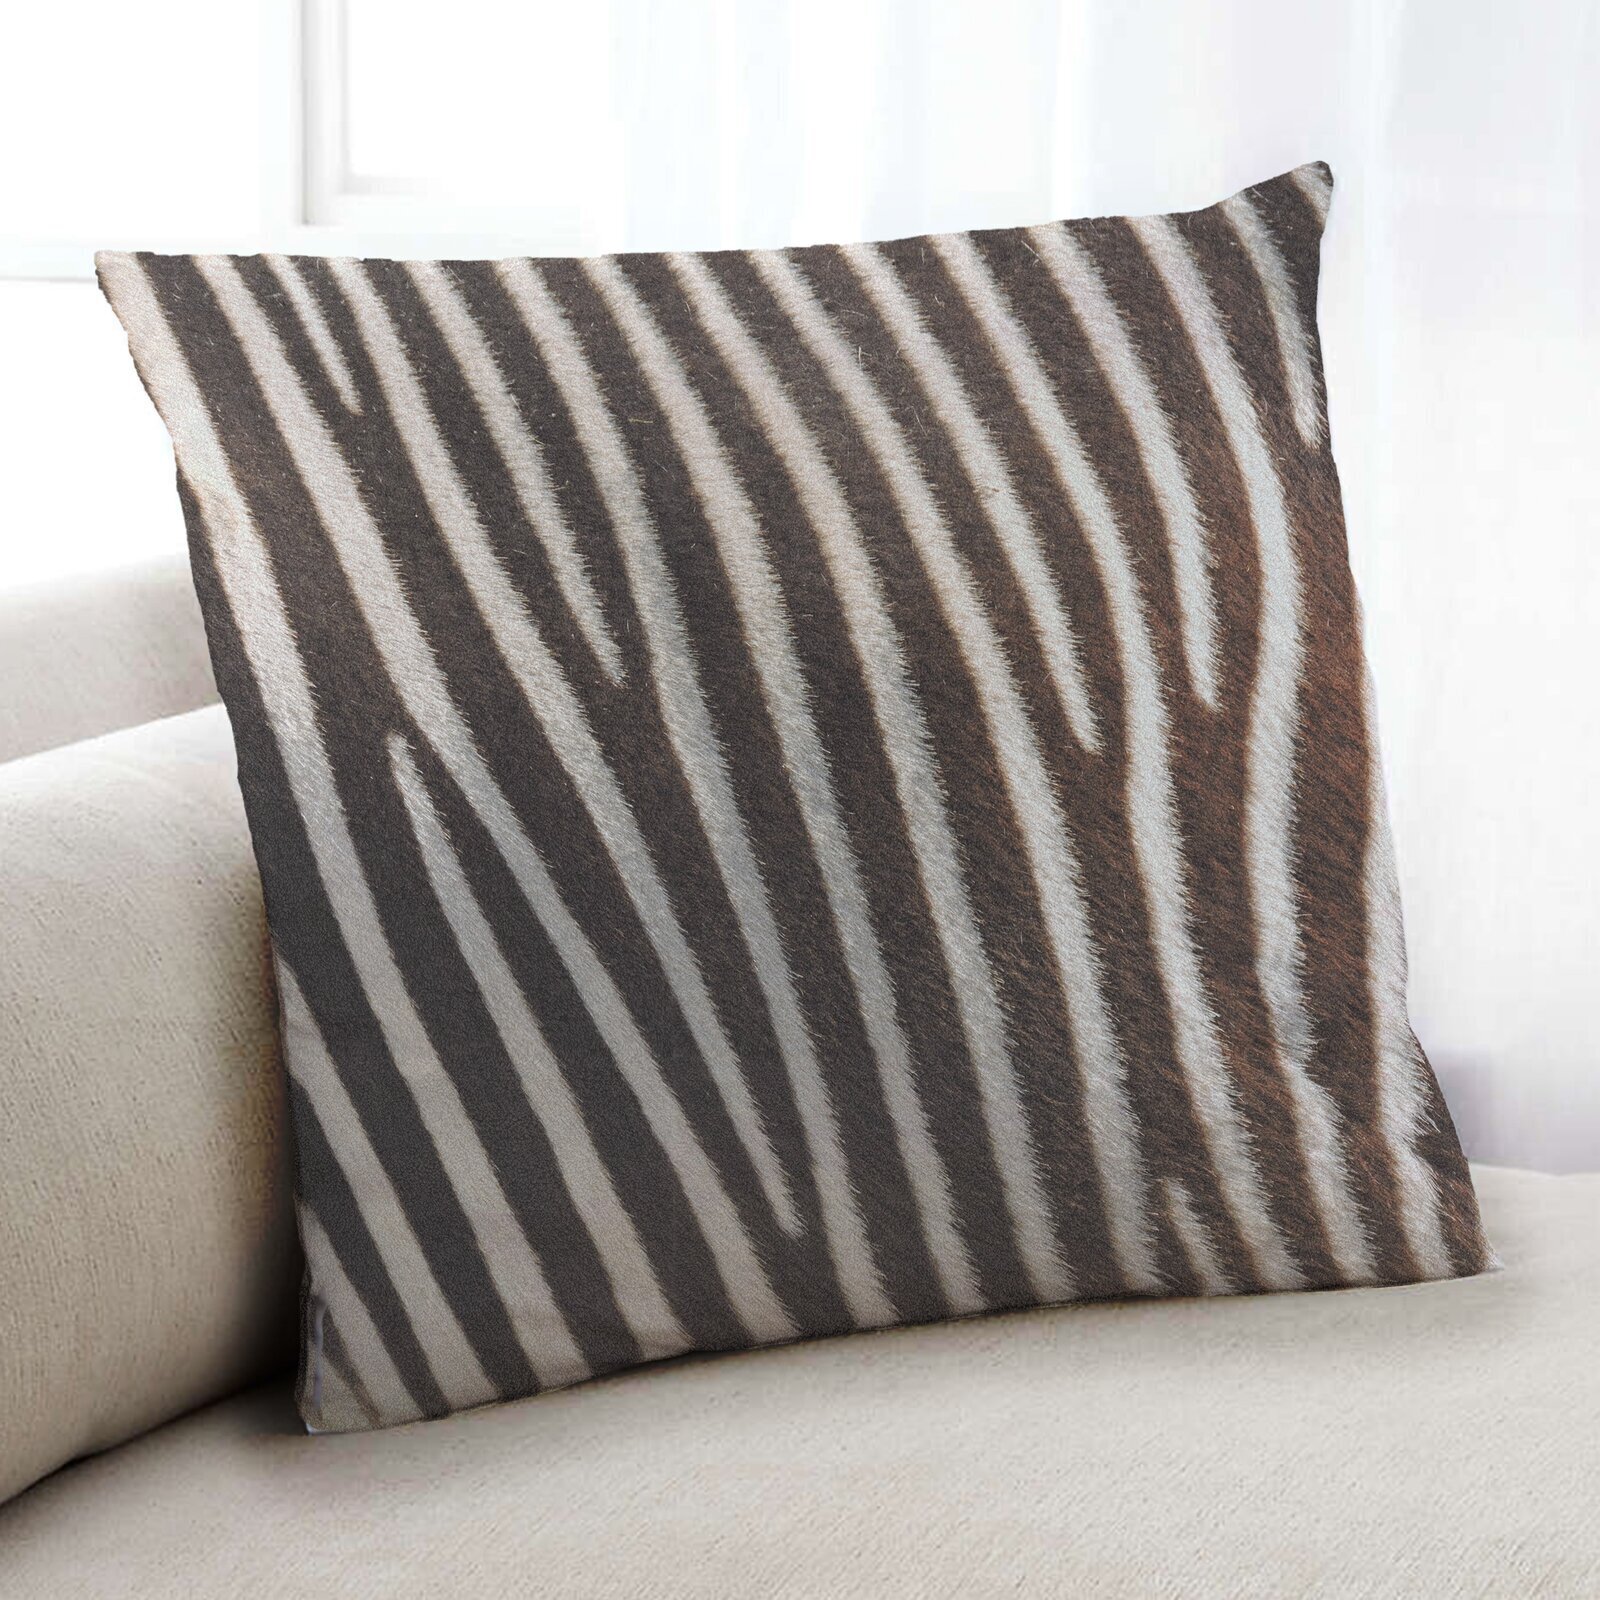 Realistic Microsuede Zebra Print Pillow